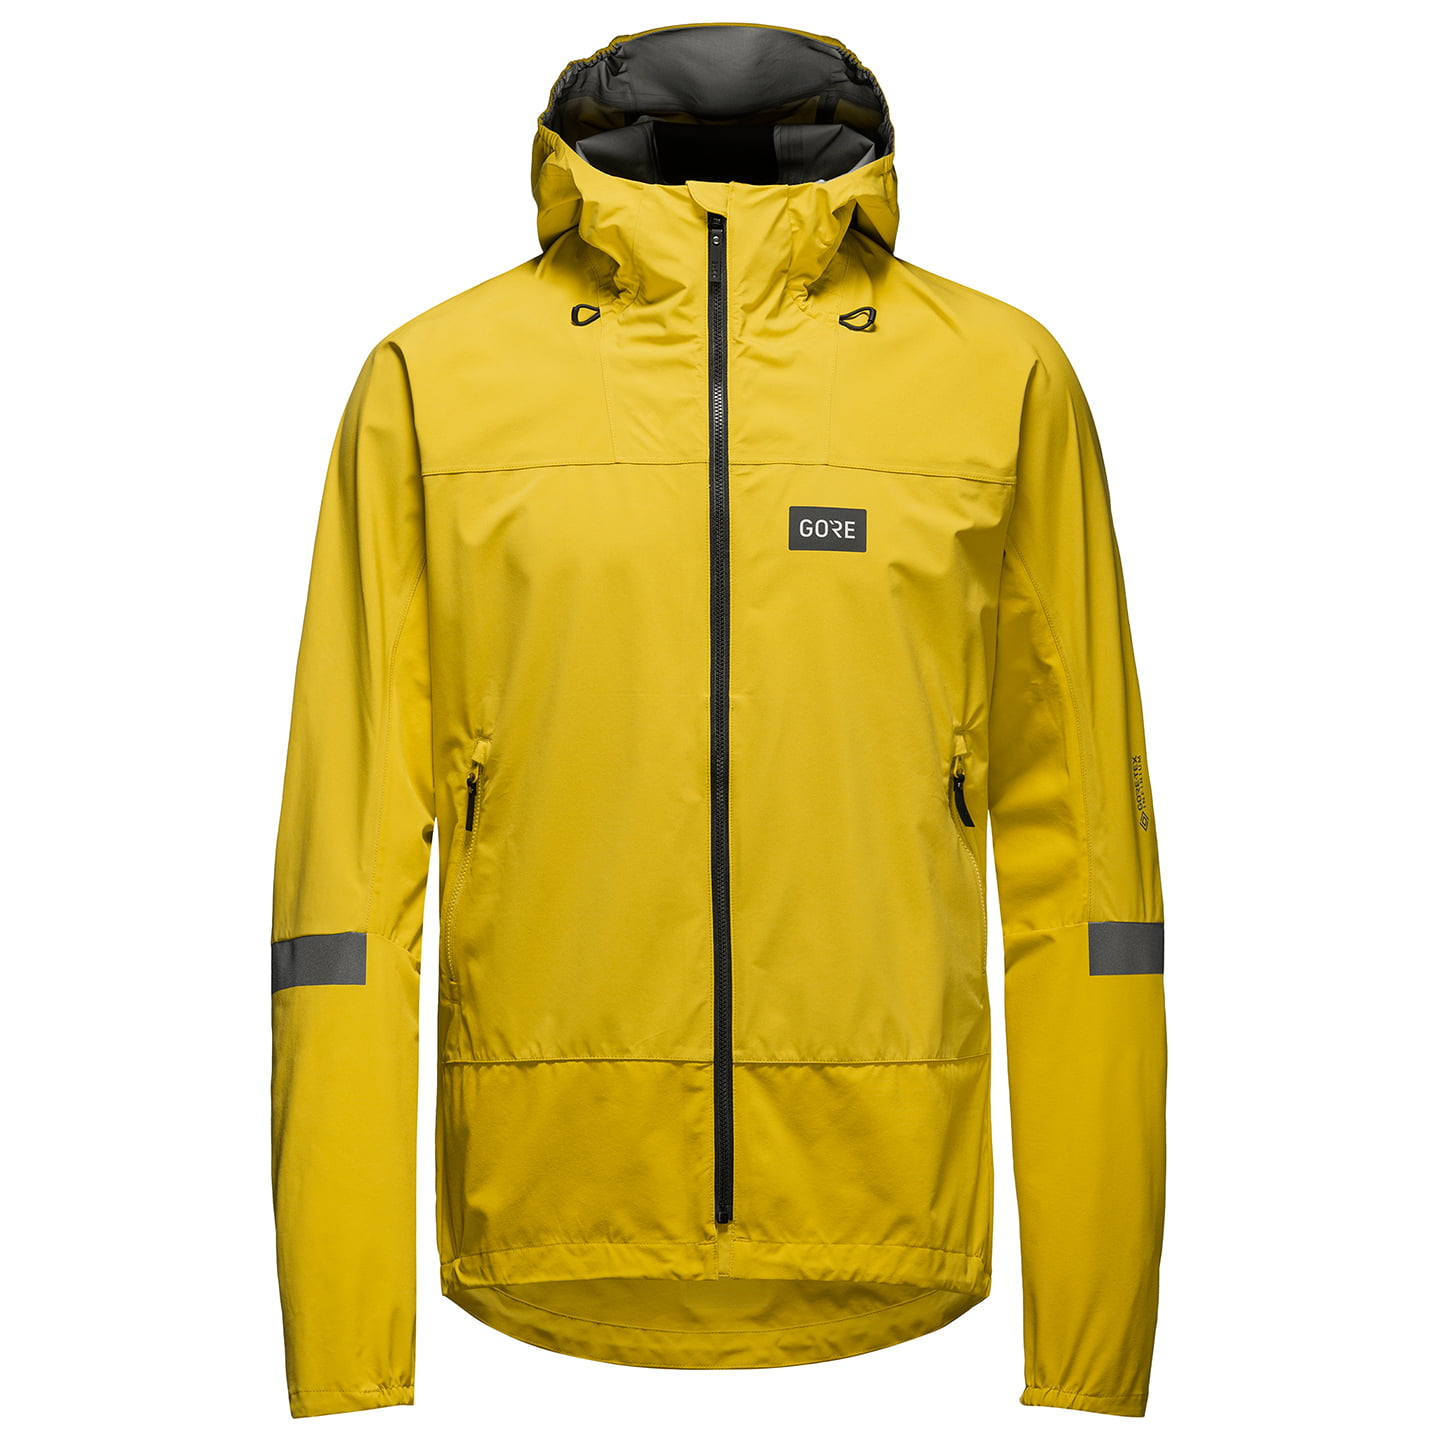 Lupra Wind Jacket, for men, size M, Bike jacket, Cycling clothing